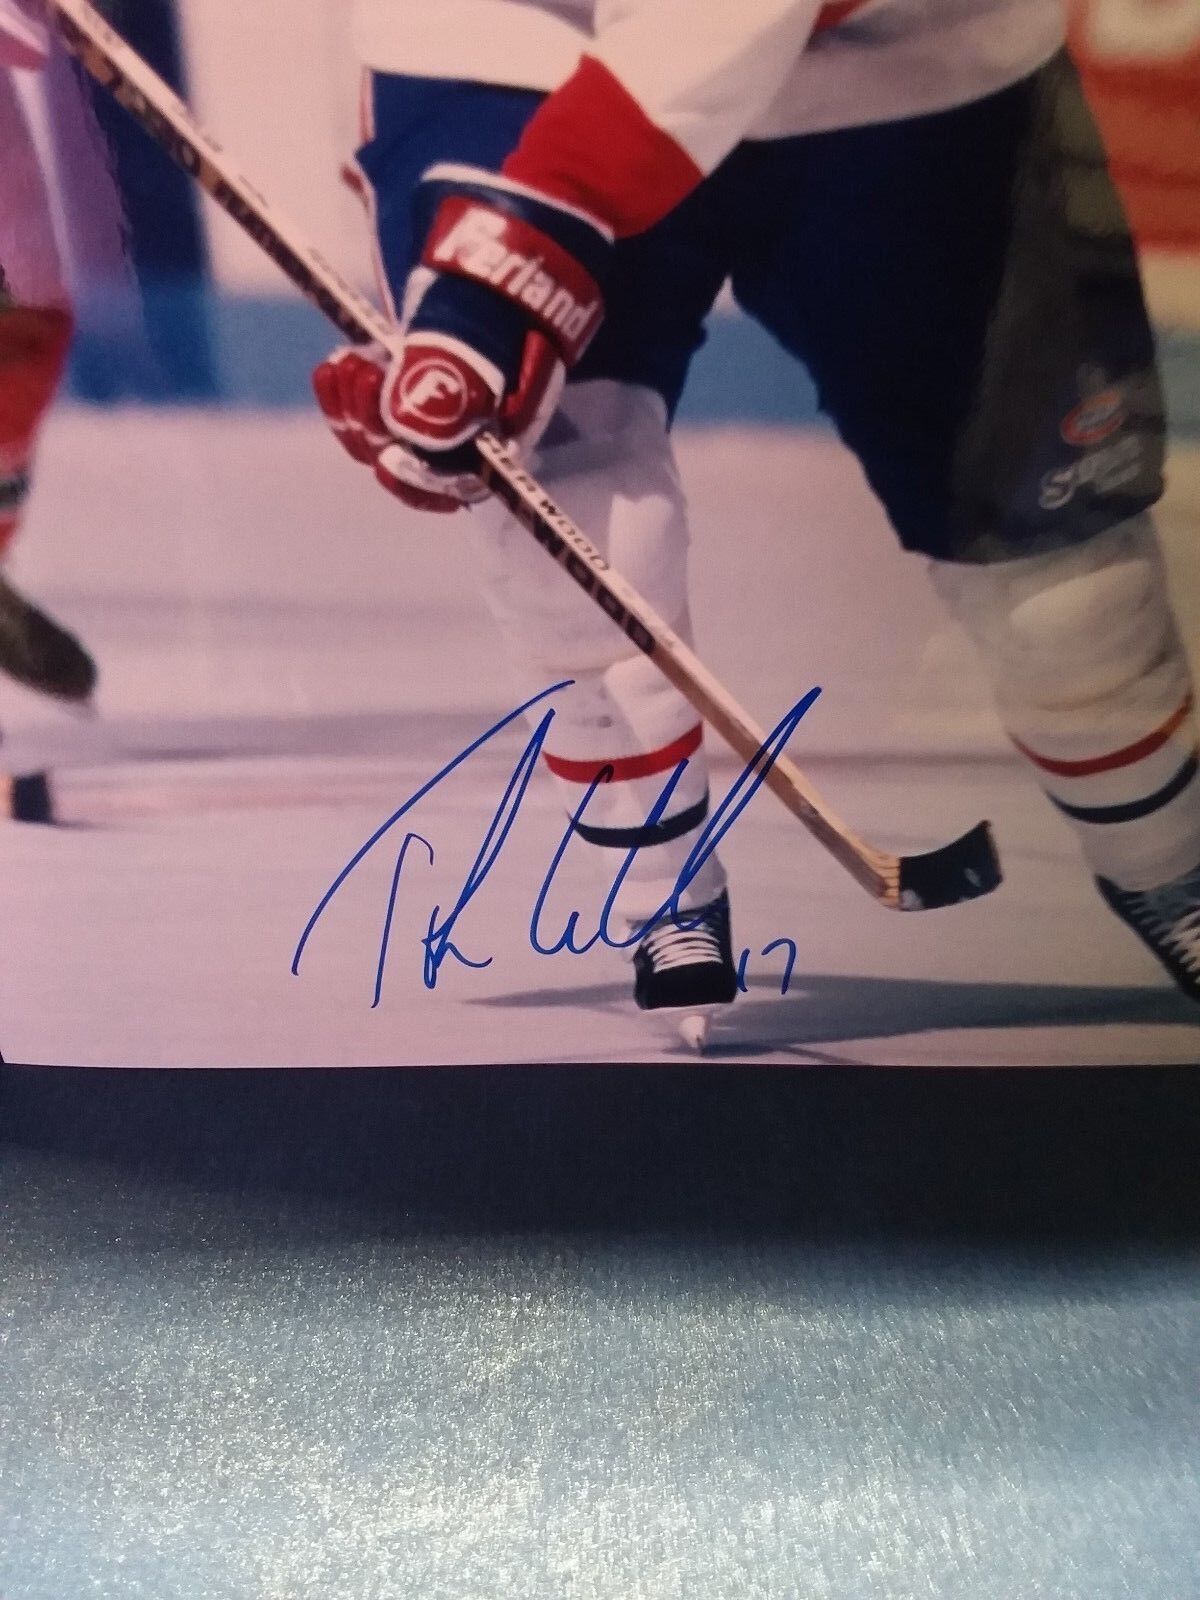 John LeClair Montreal Canadiens Autographed 8x10 Photo